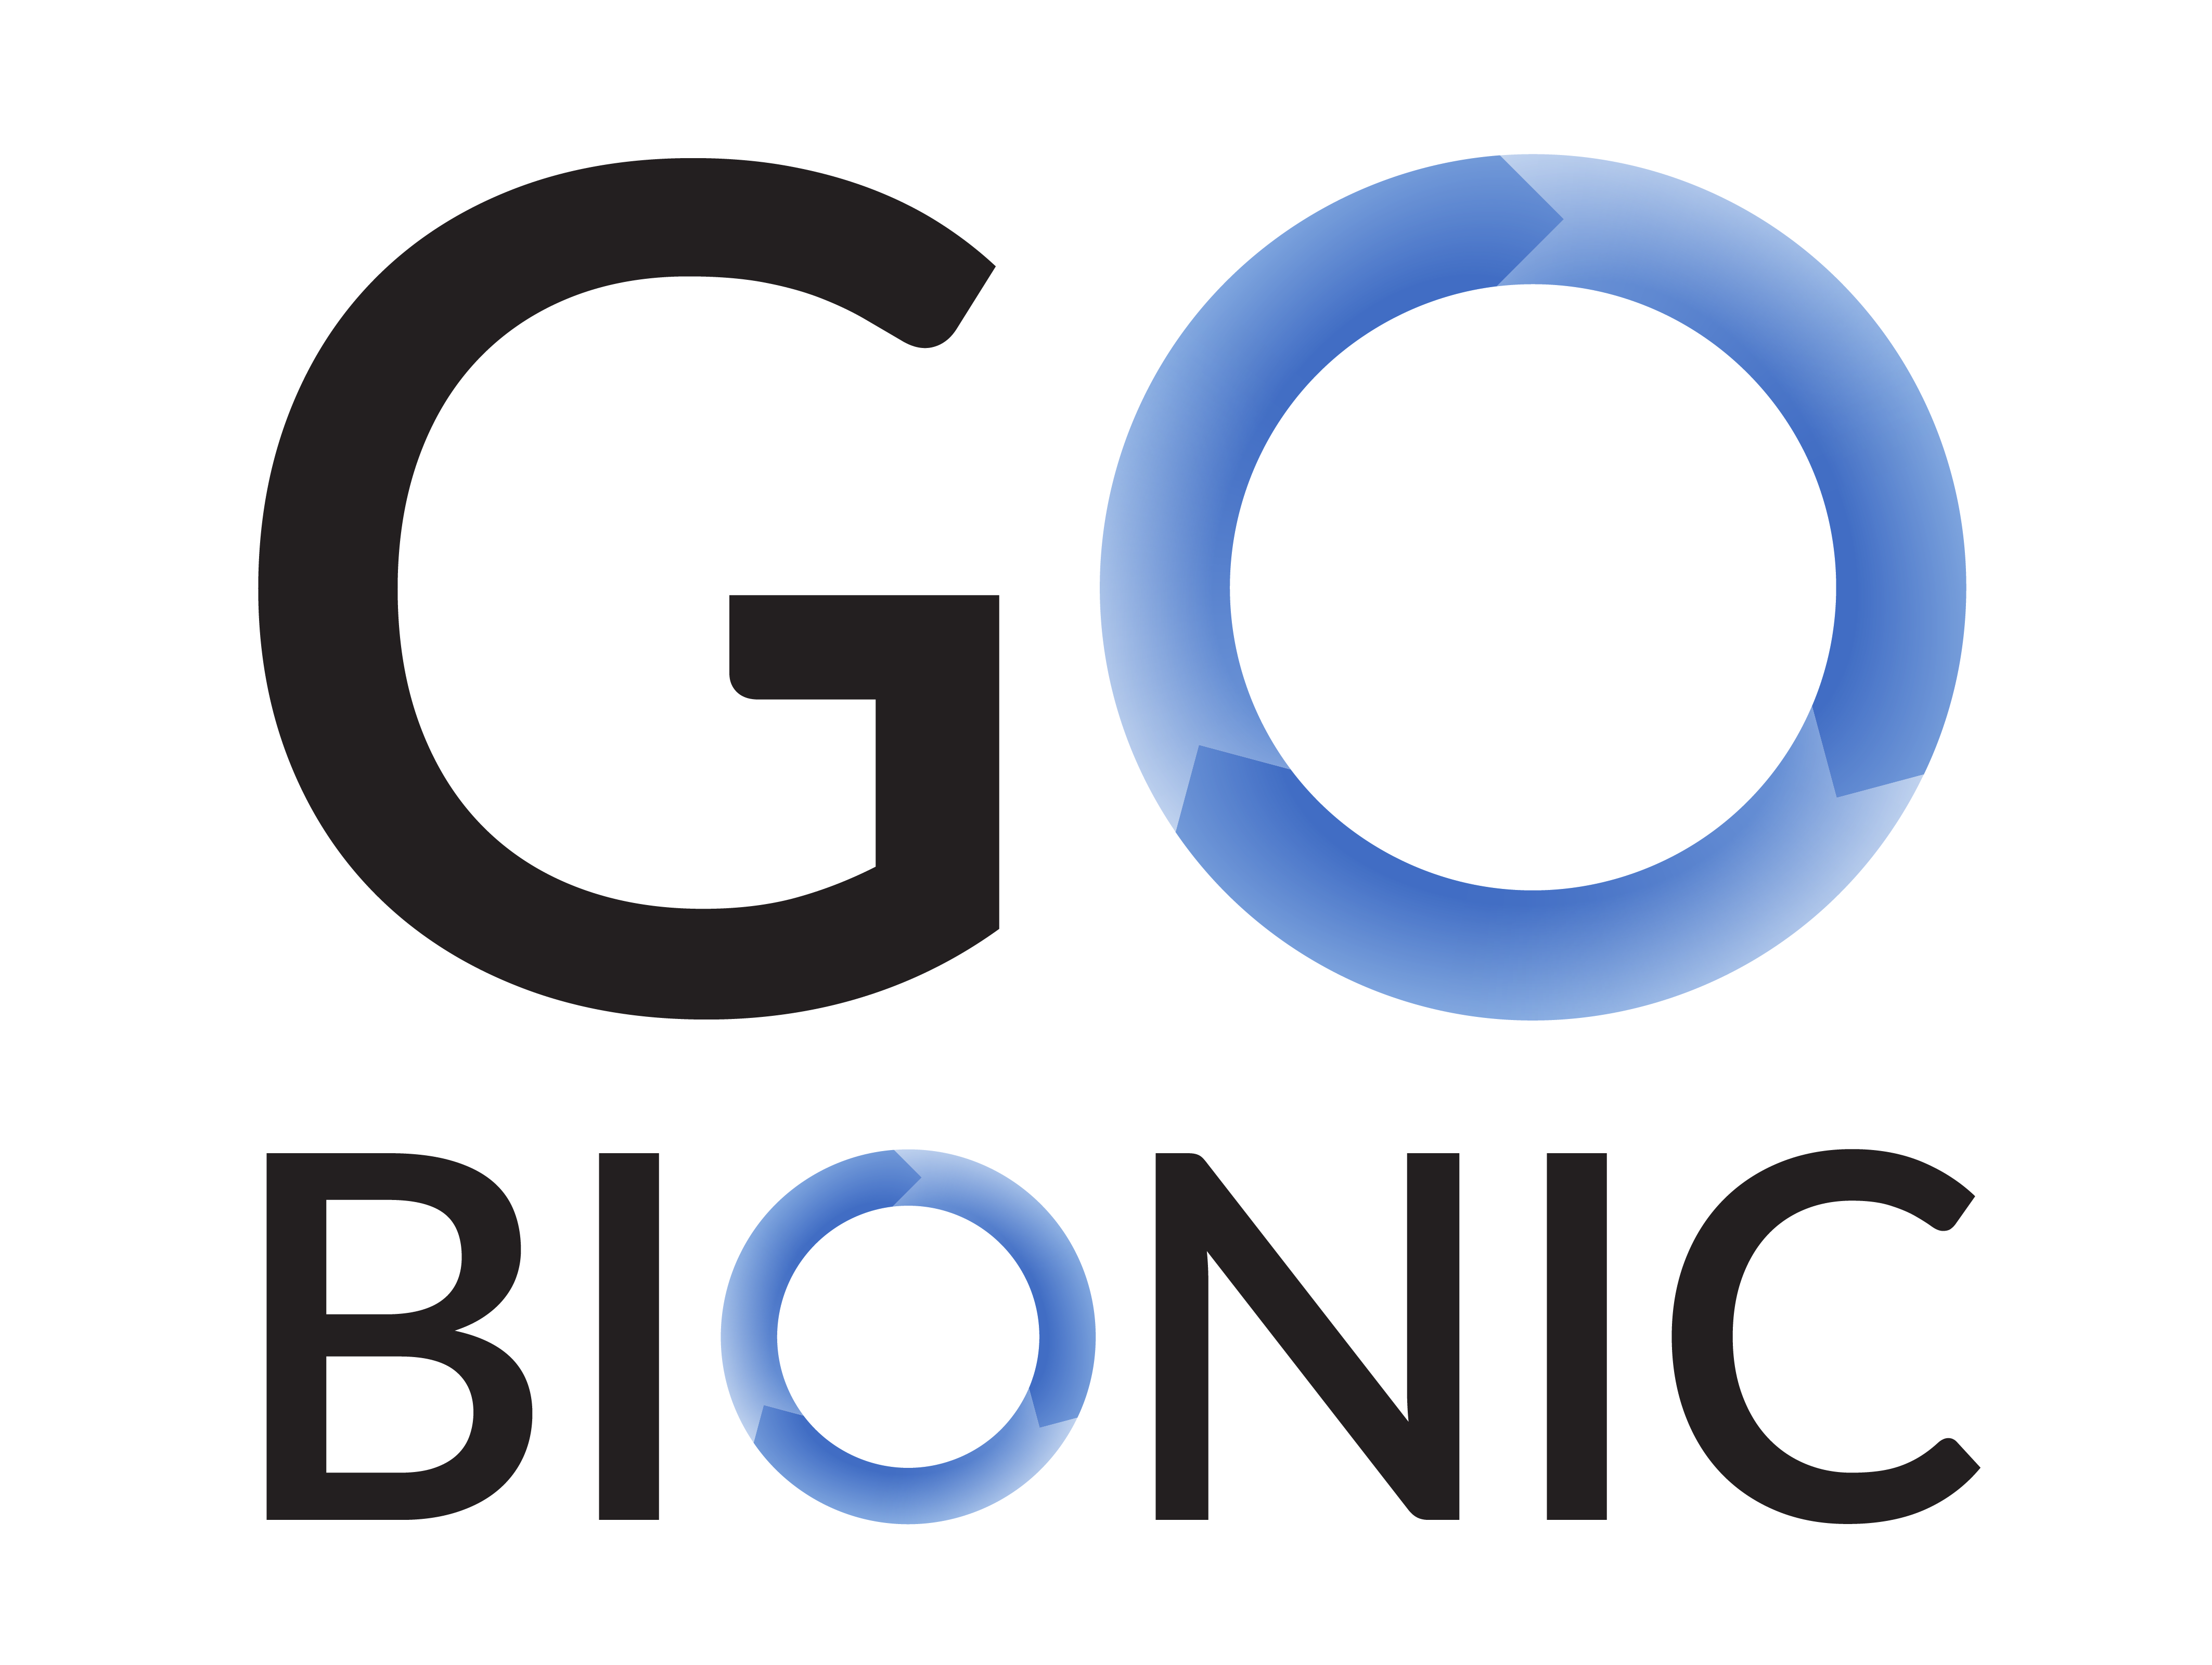 Go Bionic Fundraiser